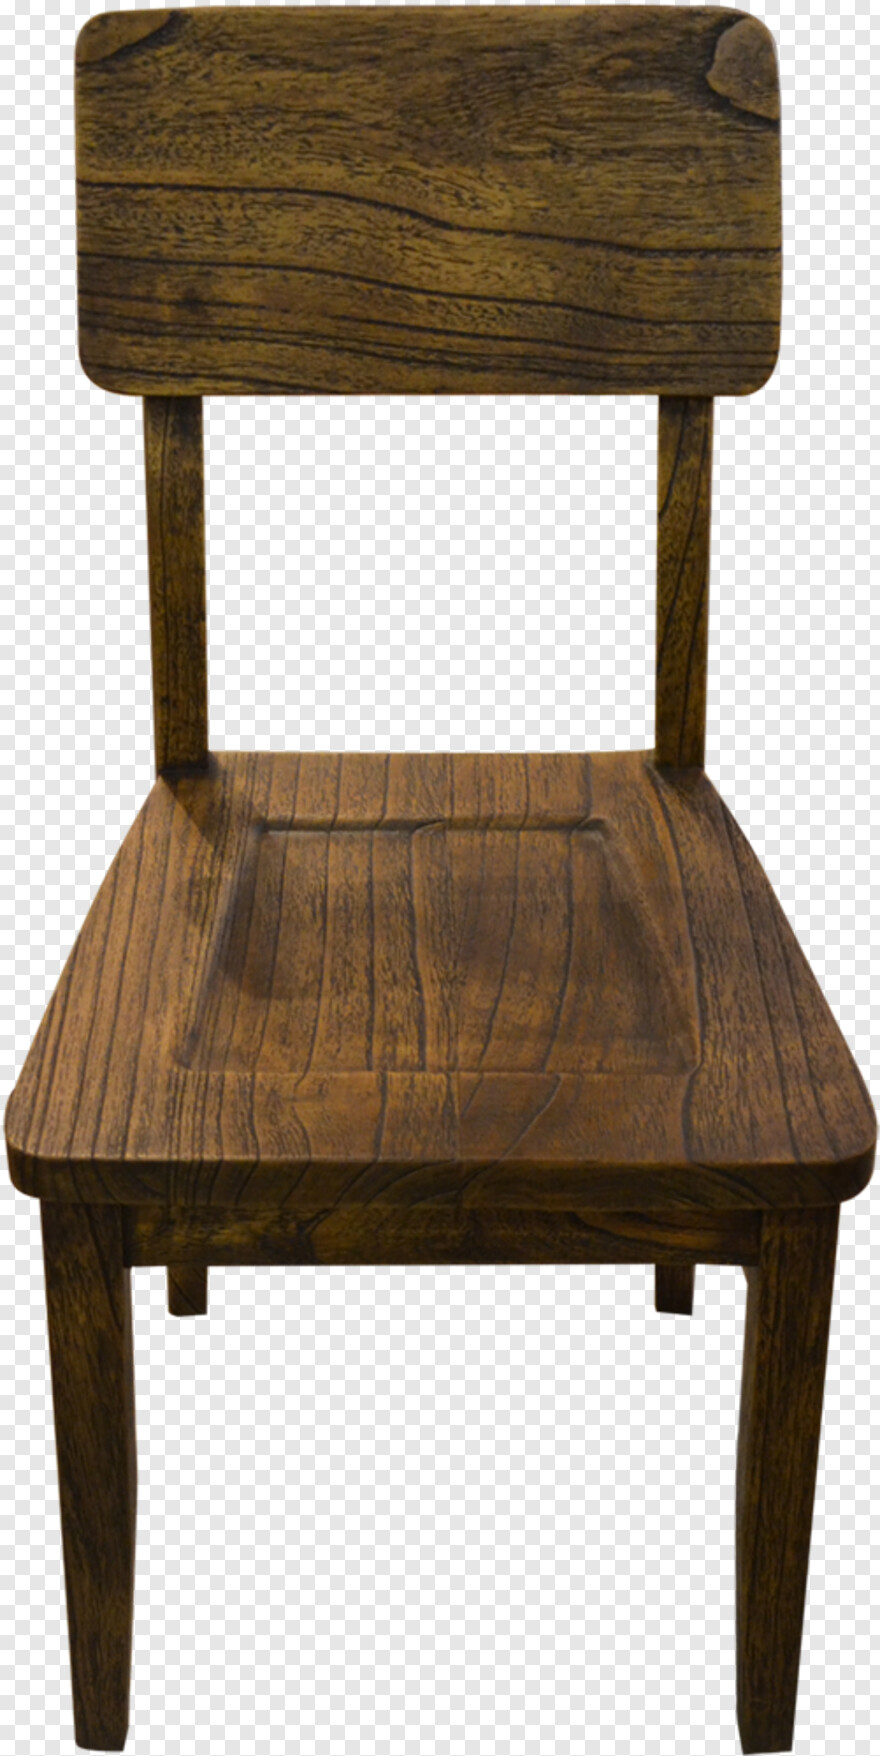  Rustic Arrow, Rustic, Person Sitting In Chair, Folding Chair, John Cena, Chair